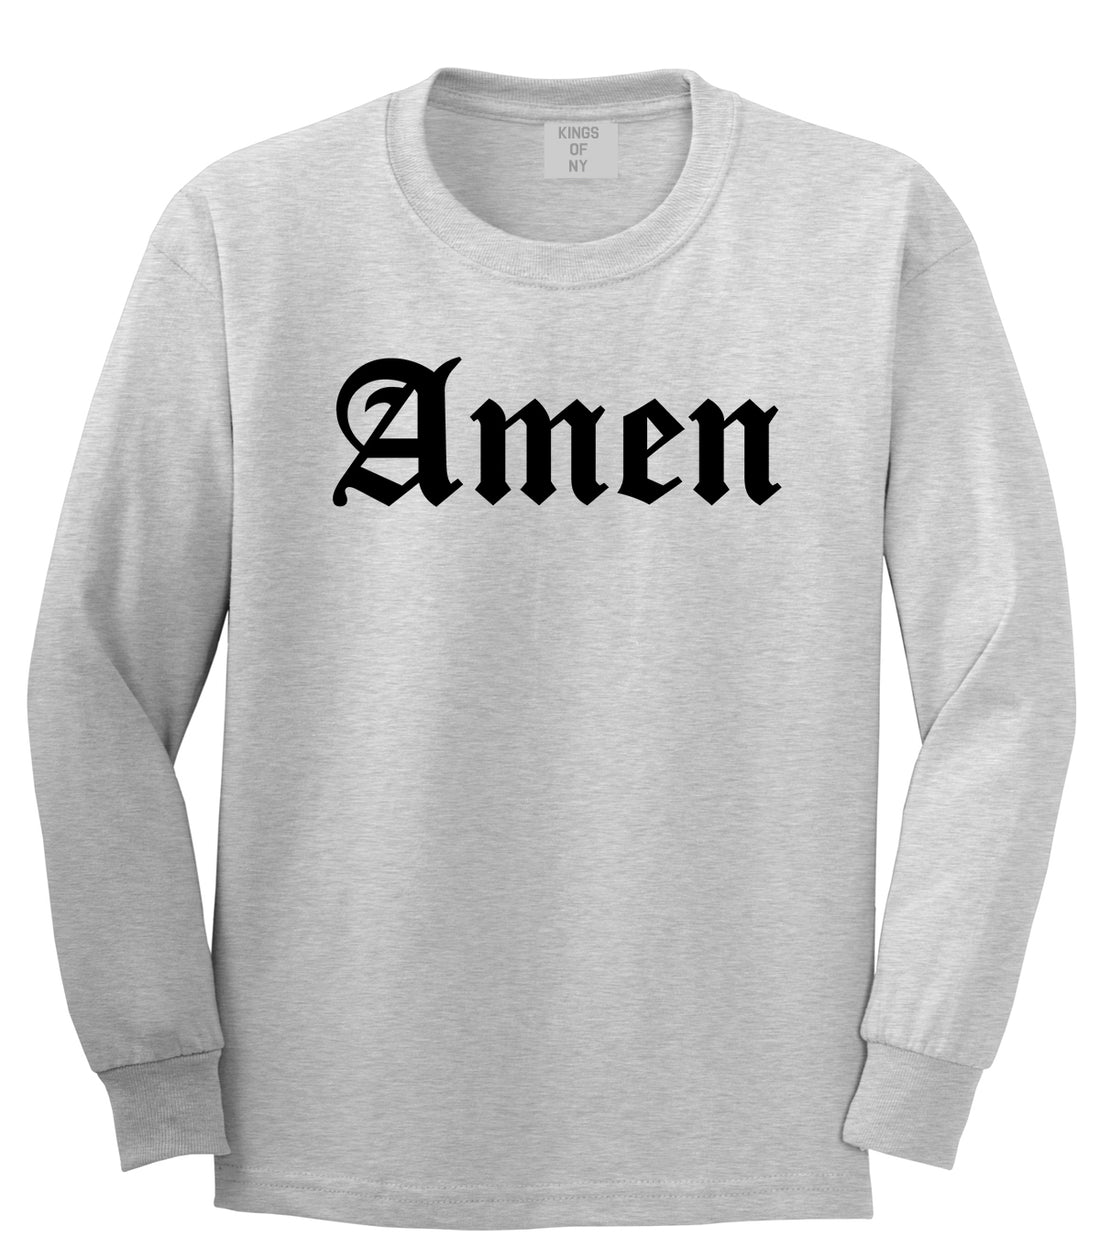 Amen Old English Prayer Mens Long Sleeve T-Shirt Grey